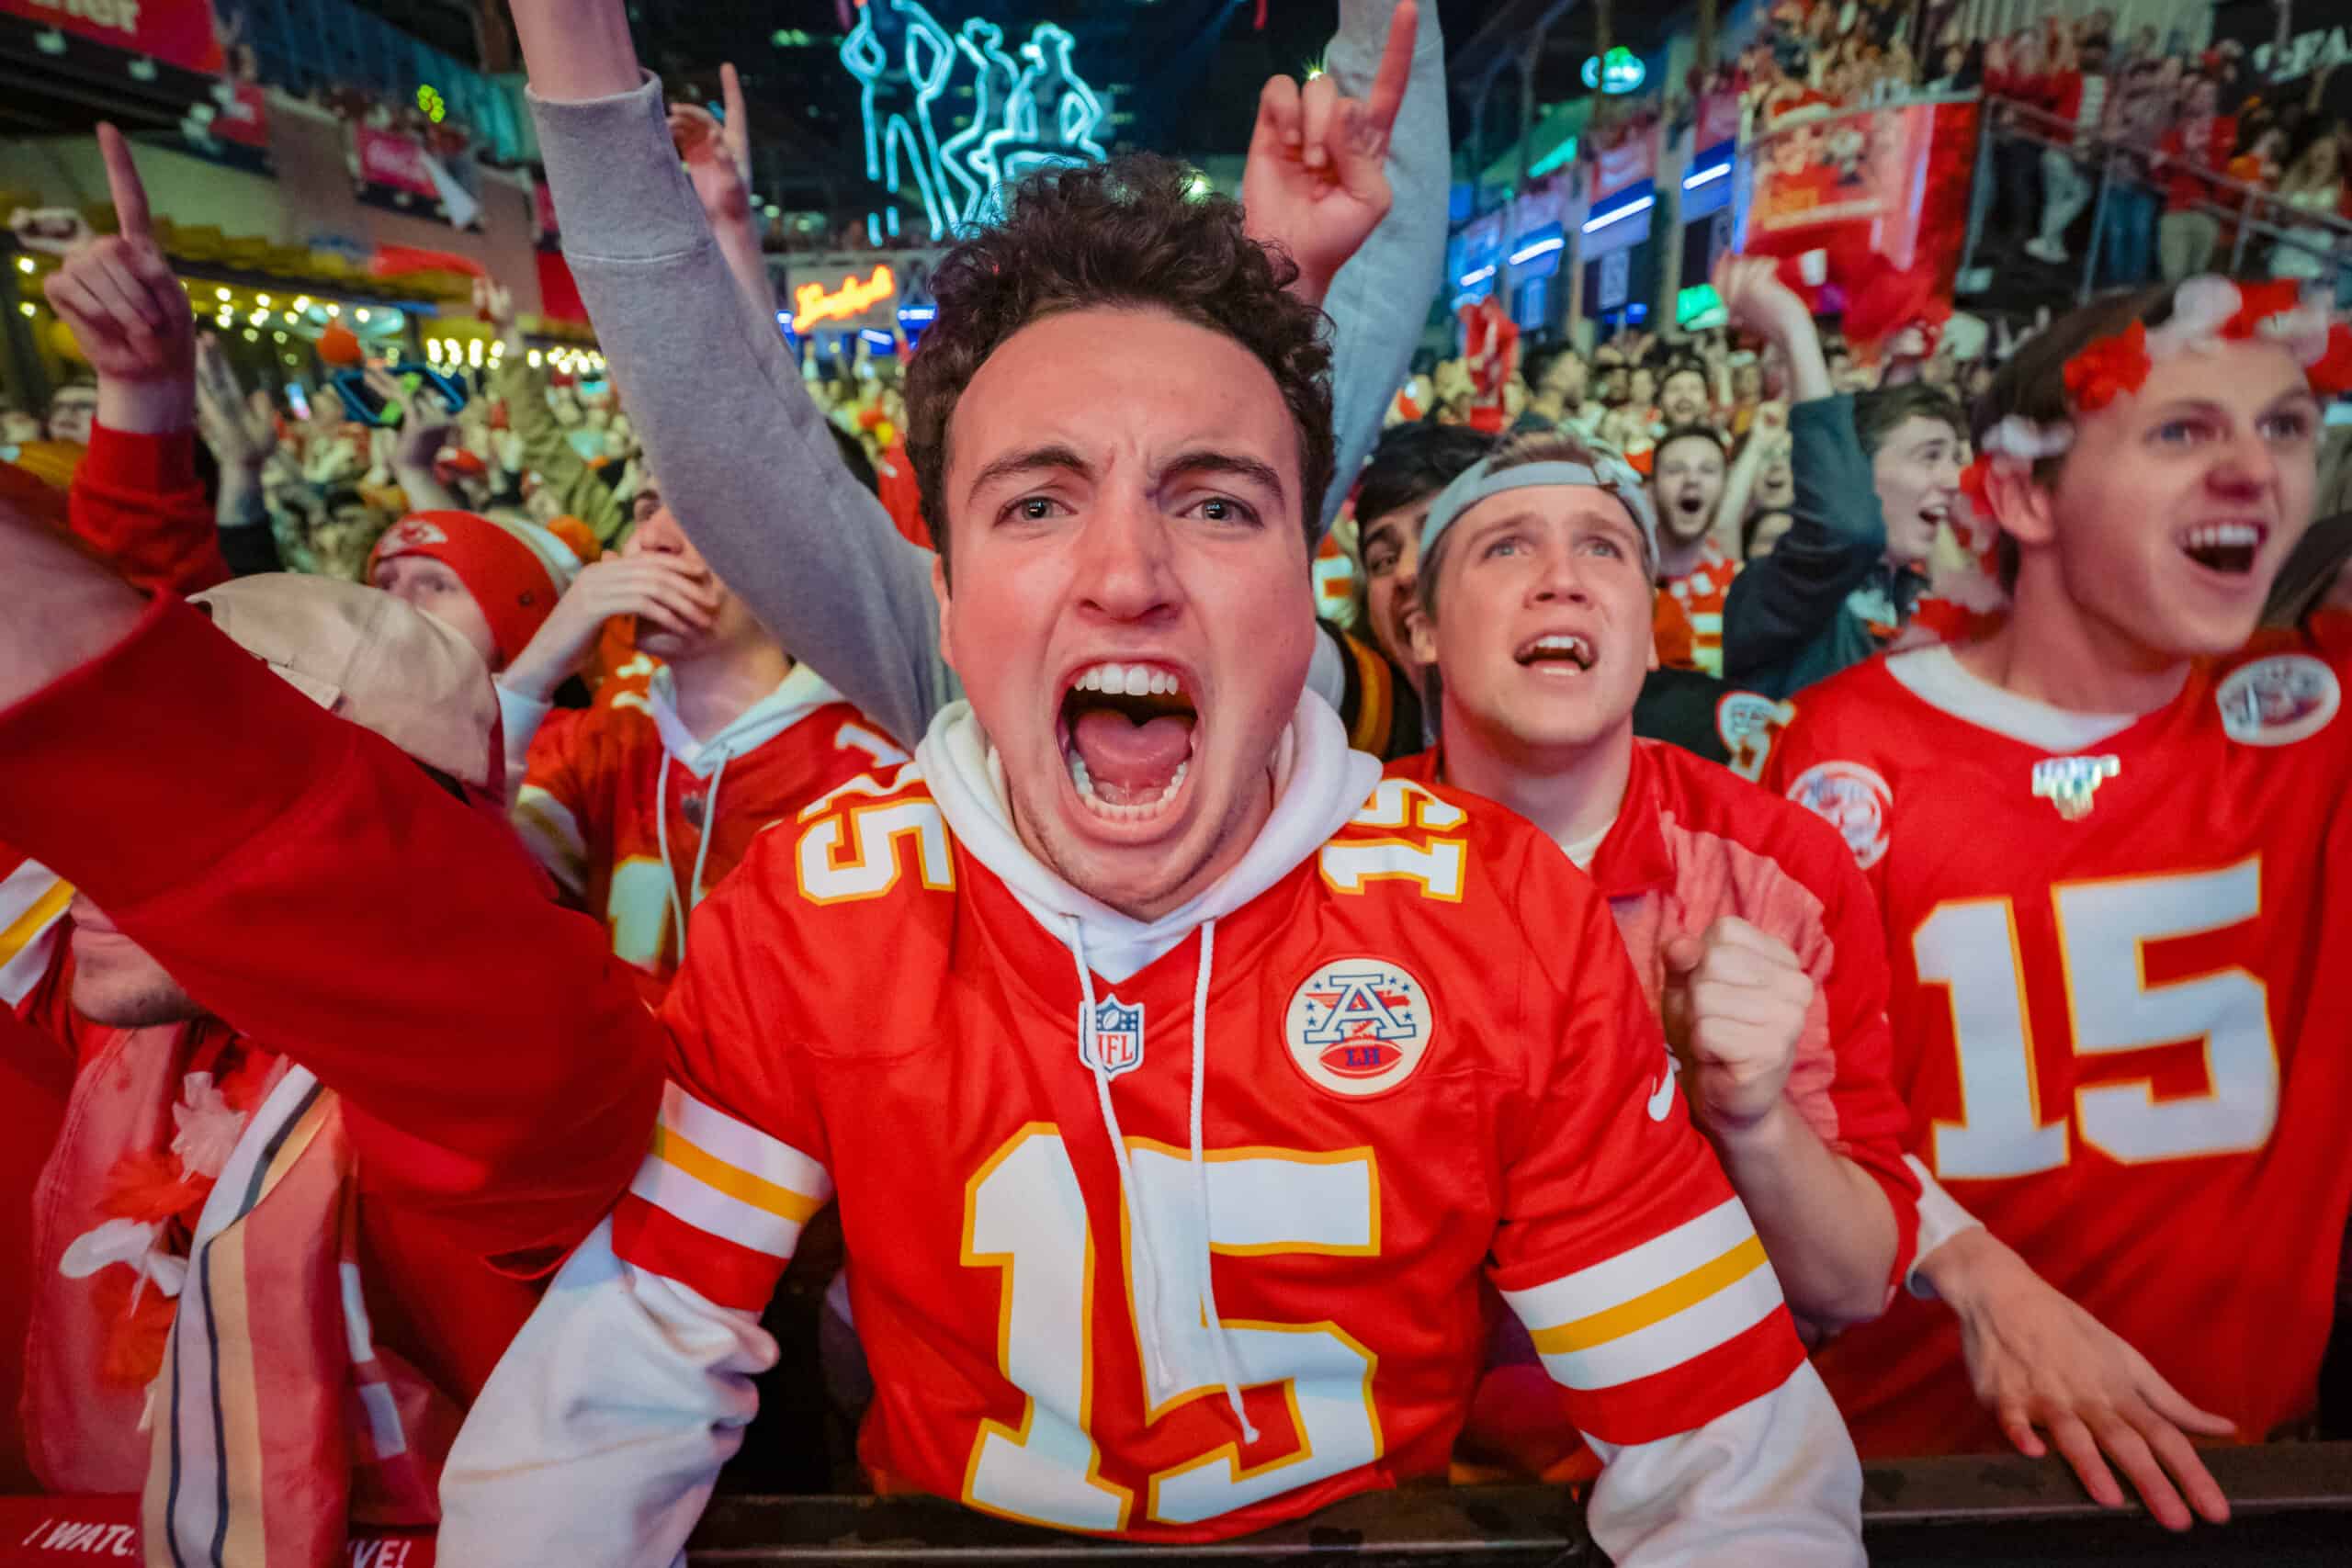 21 Least Popular Football Teams According to Millennials: Ranked